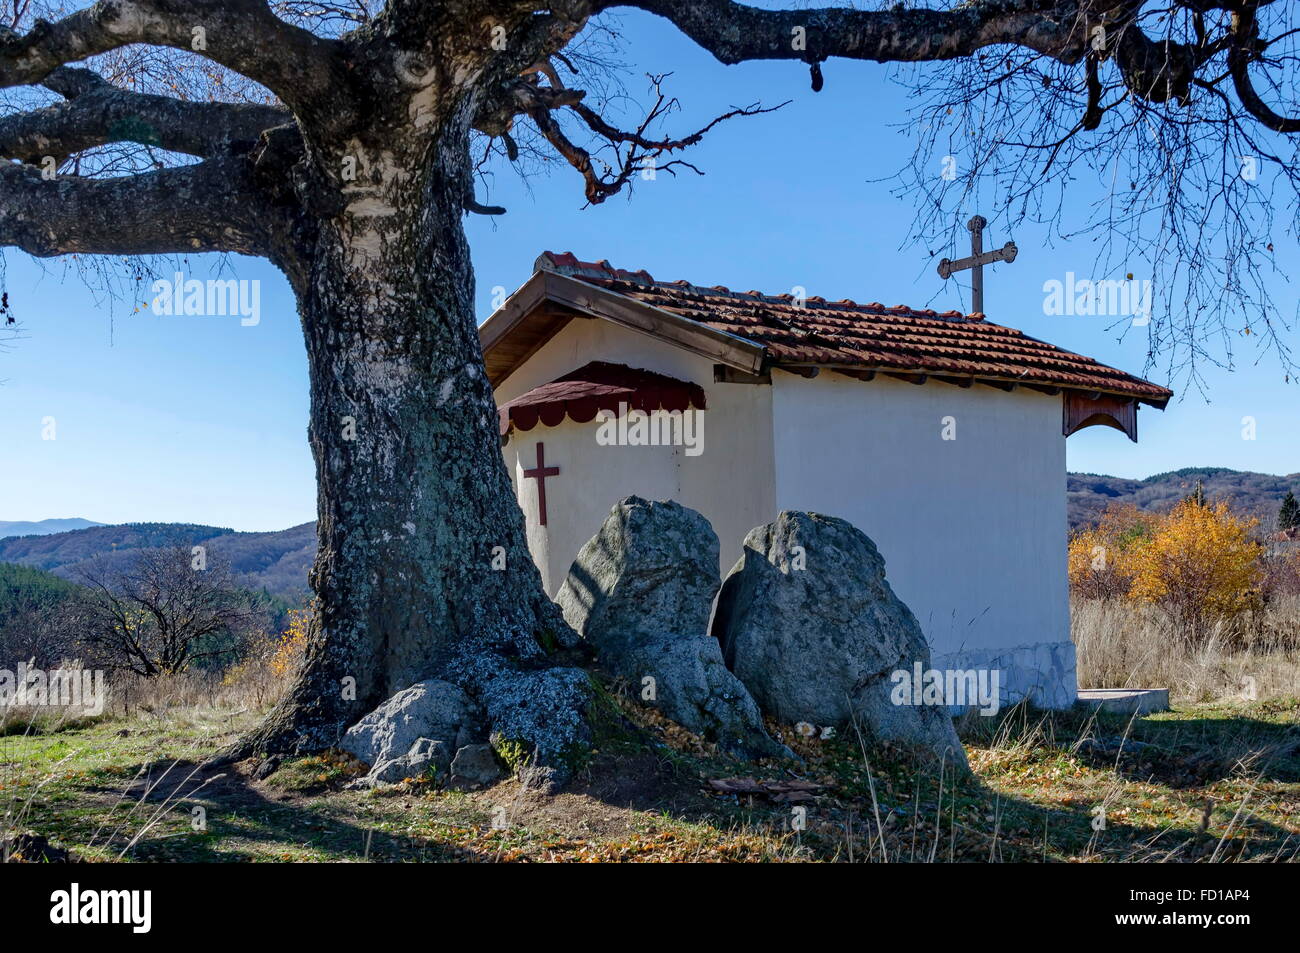 La capilla 'Saint Cipriano' con el venerable Birch Tree, Plana Bulgaria Foto de stock